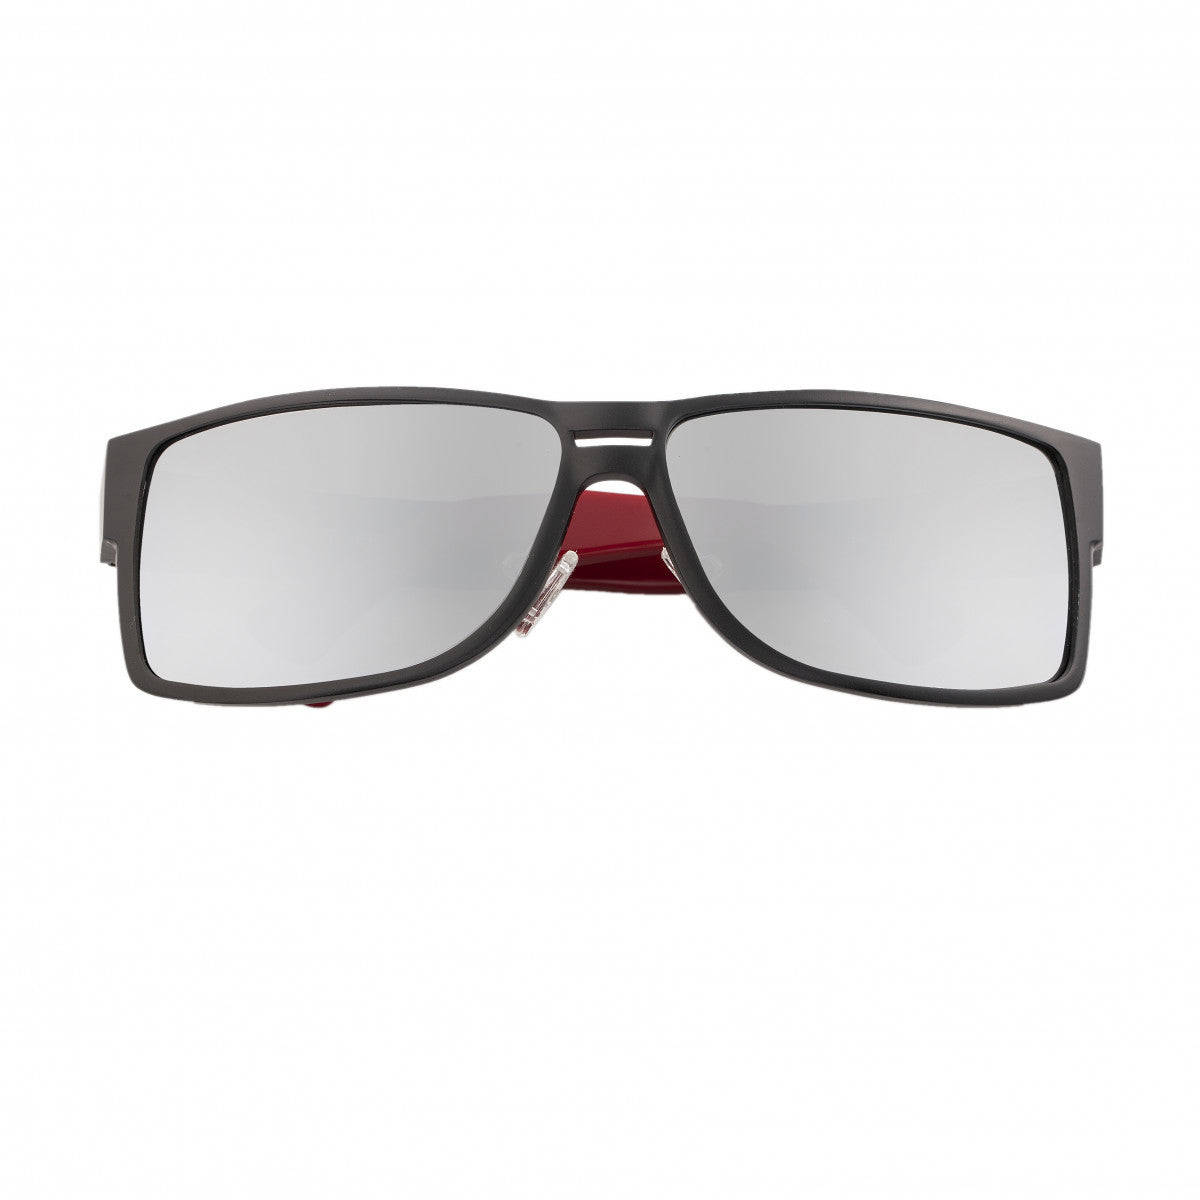 Breed Stratus Aluminium Polarized Sunglasses - Black/Silver - BSG010BK